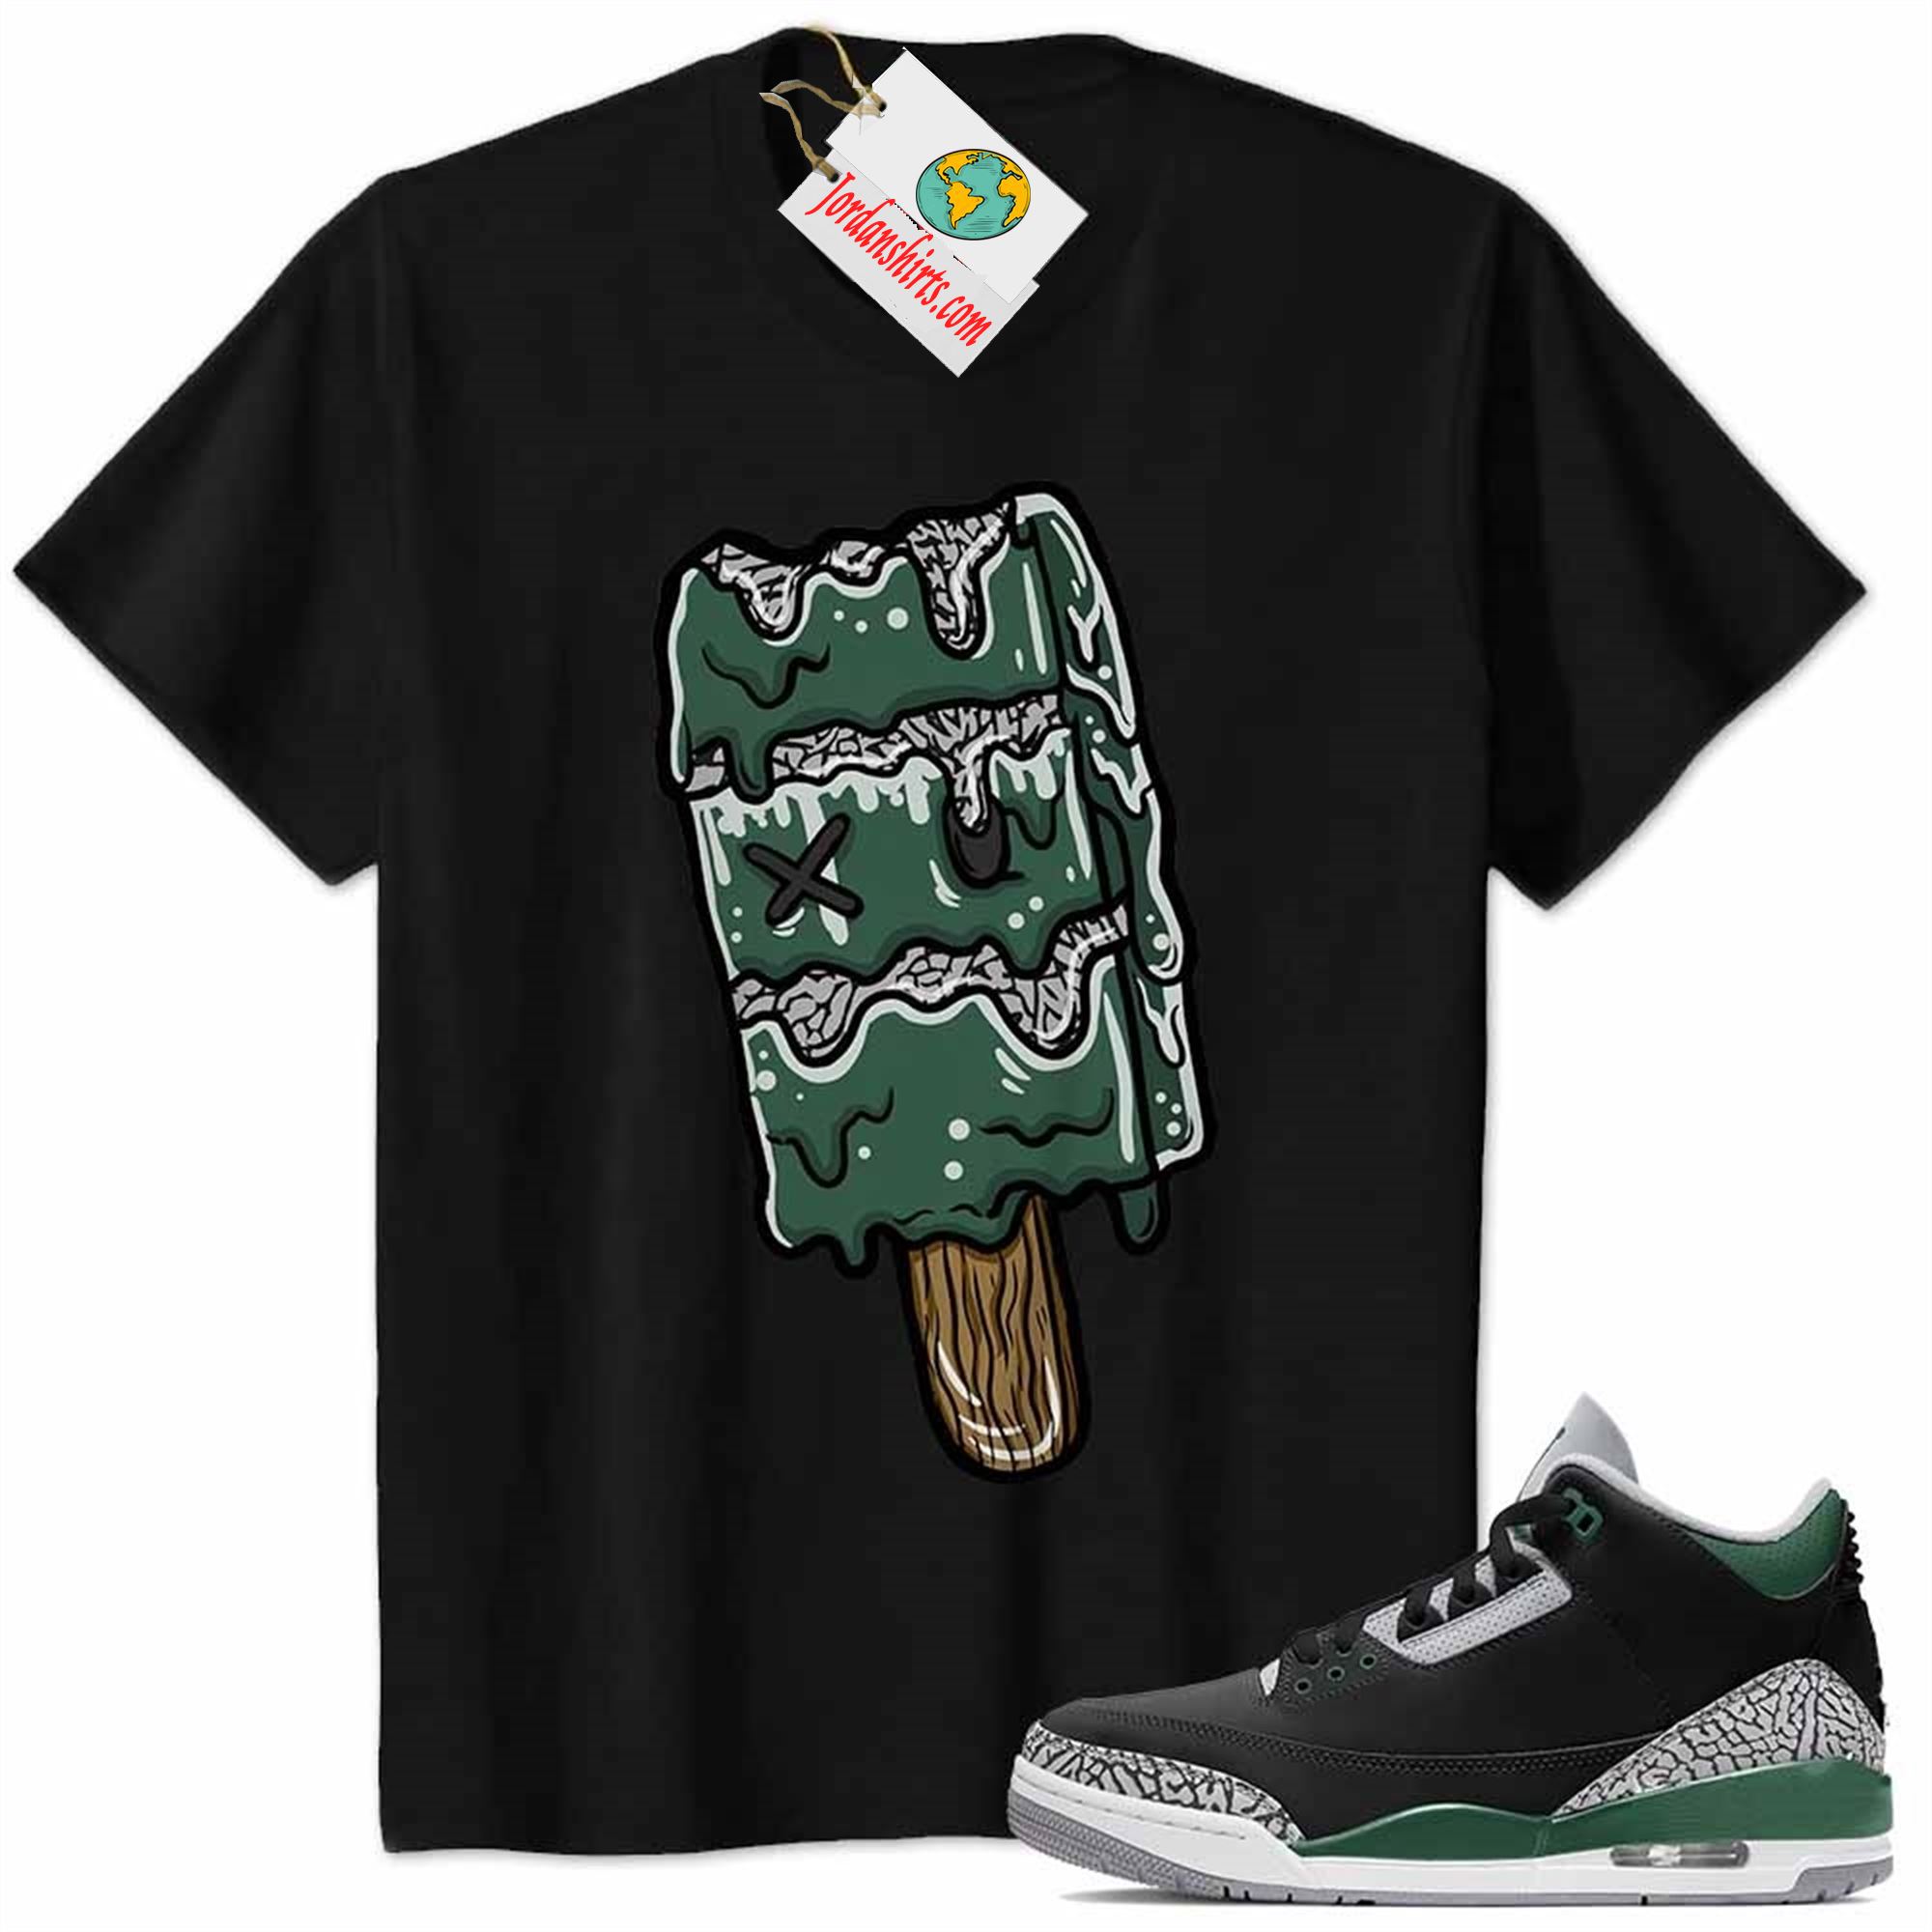 Jordan 3 Shirt, Ice Cream Dripping Black Air Jordan 3 Pine Green 3s Size Up To 5xl